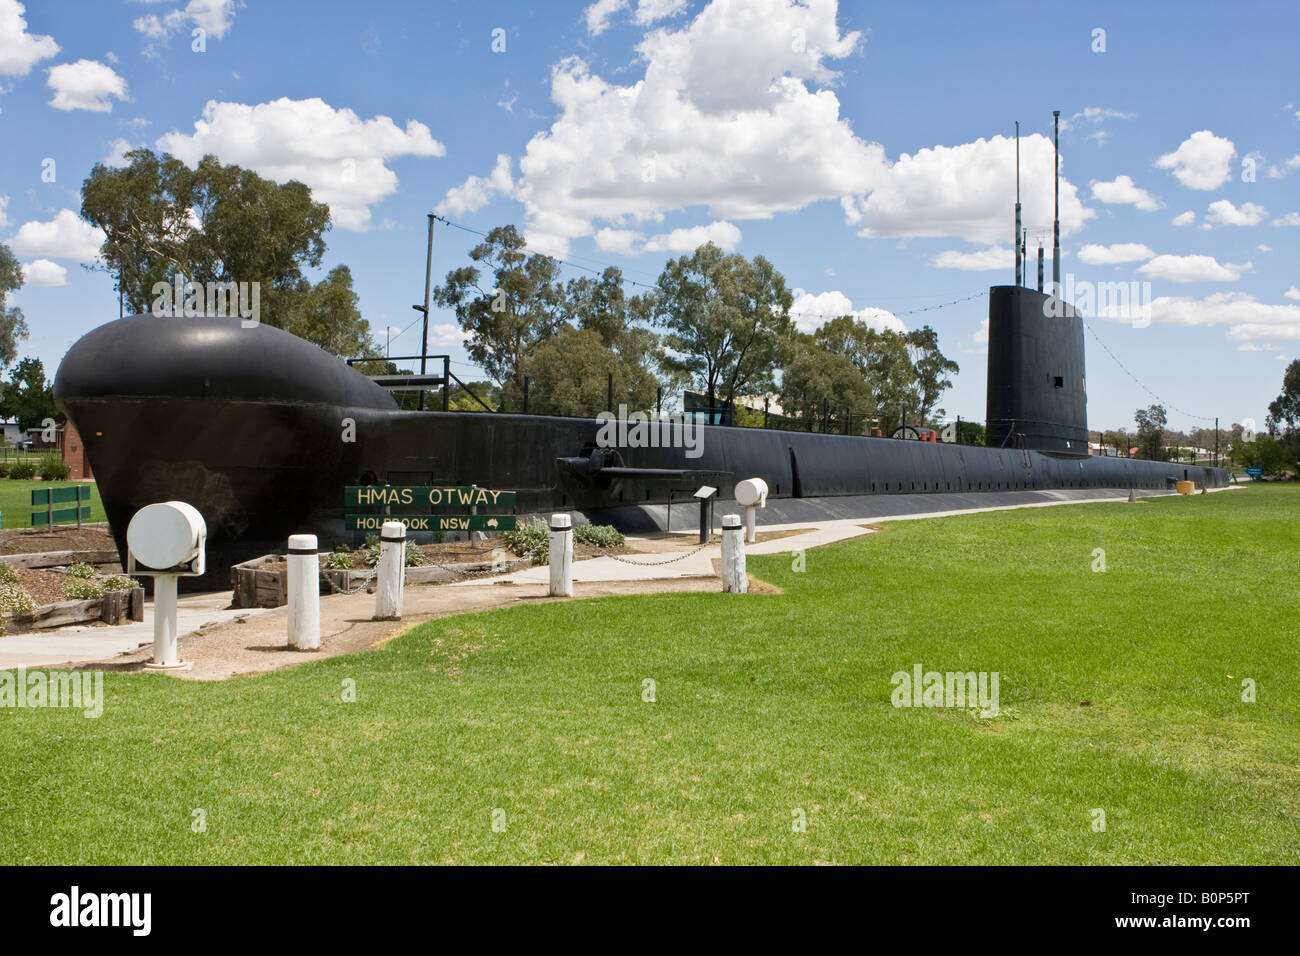 HMAS Otway monument at Holbrook in NSW, Australia Stock Photo